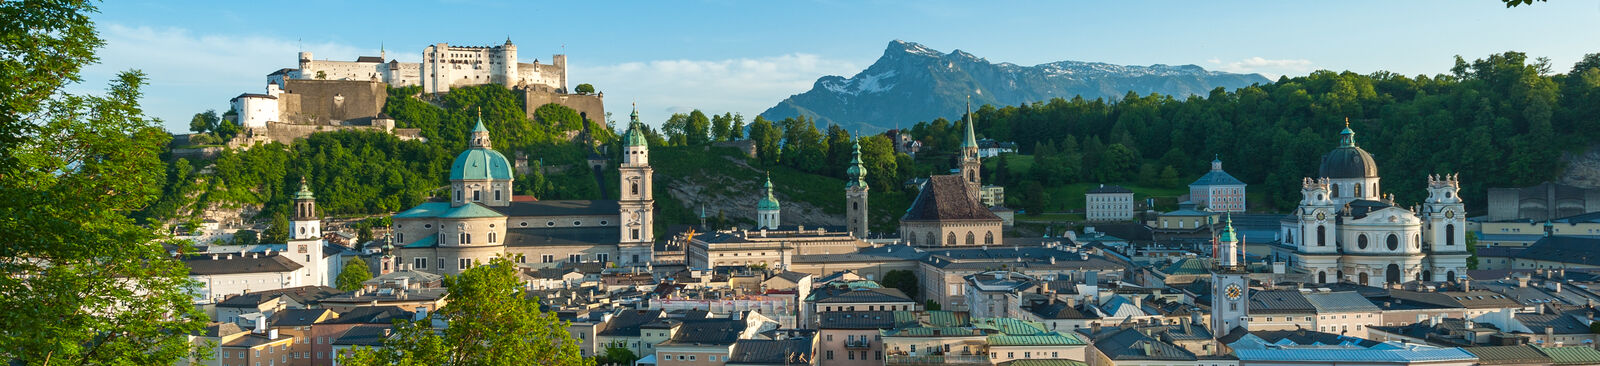 Salzburg - View from Kapuzinerberg